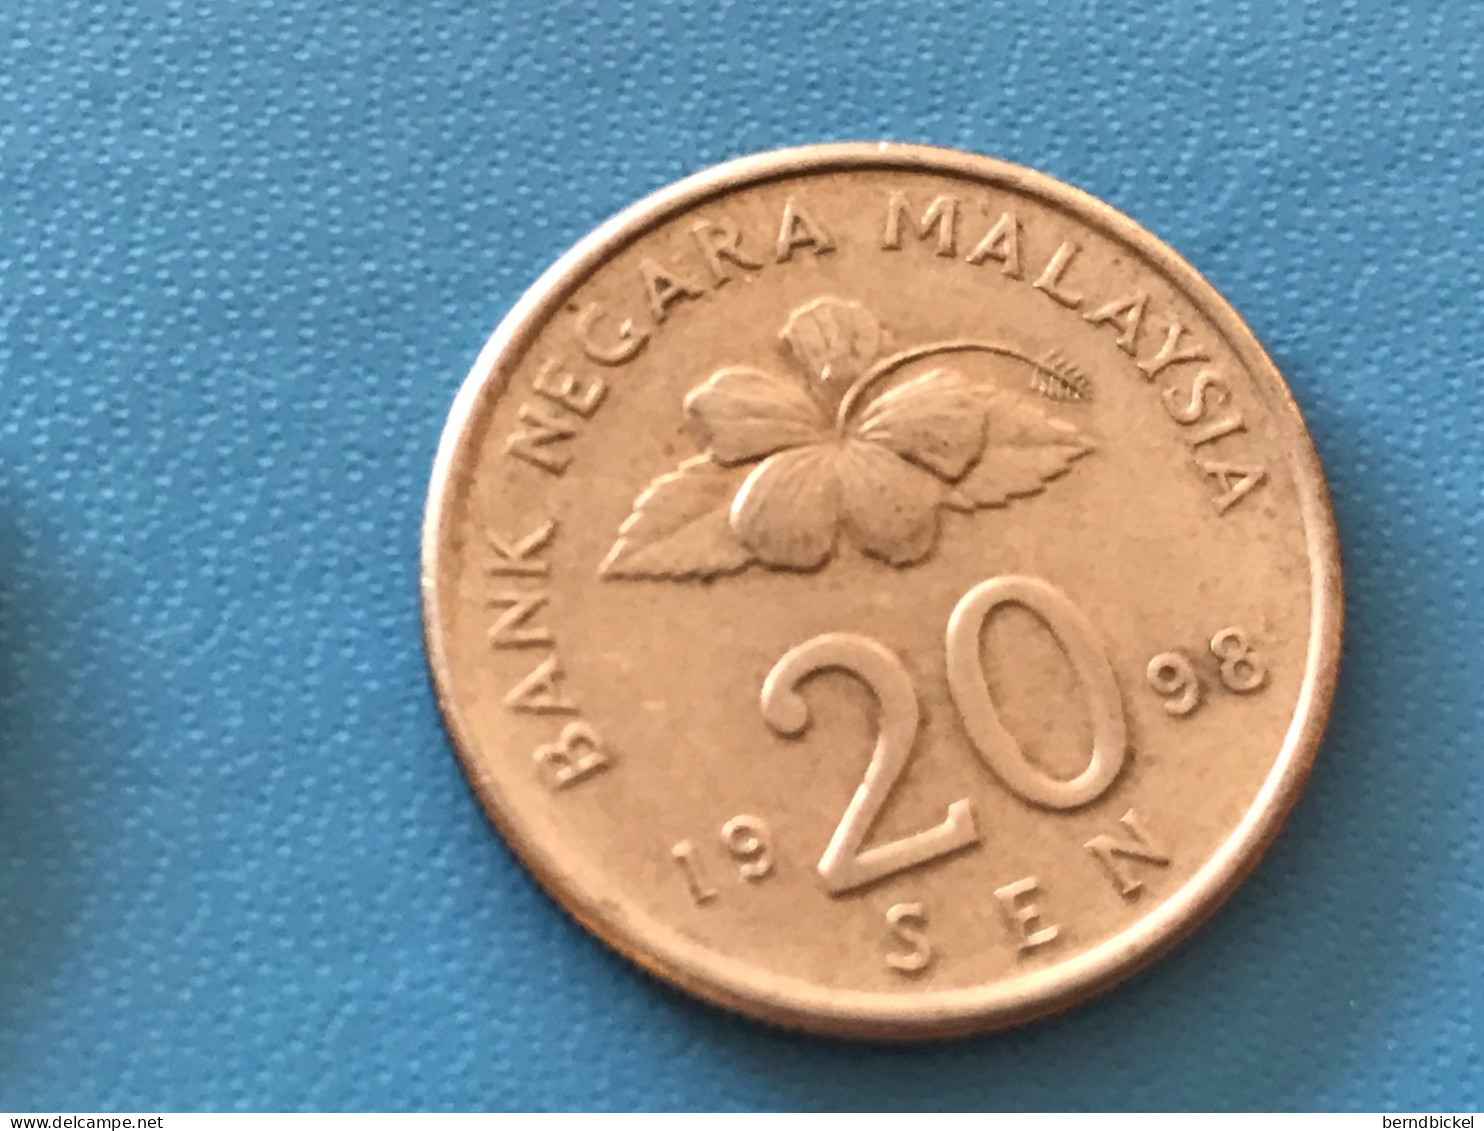 Münze Münzen Umlaufmünze Malaysia 20 Sen 1998 - Malaysie